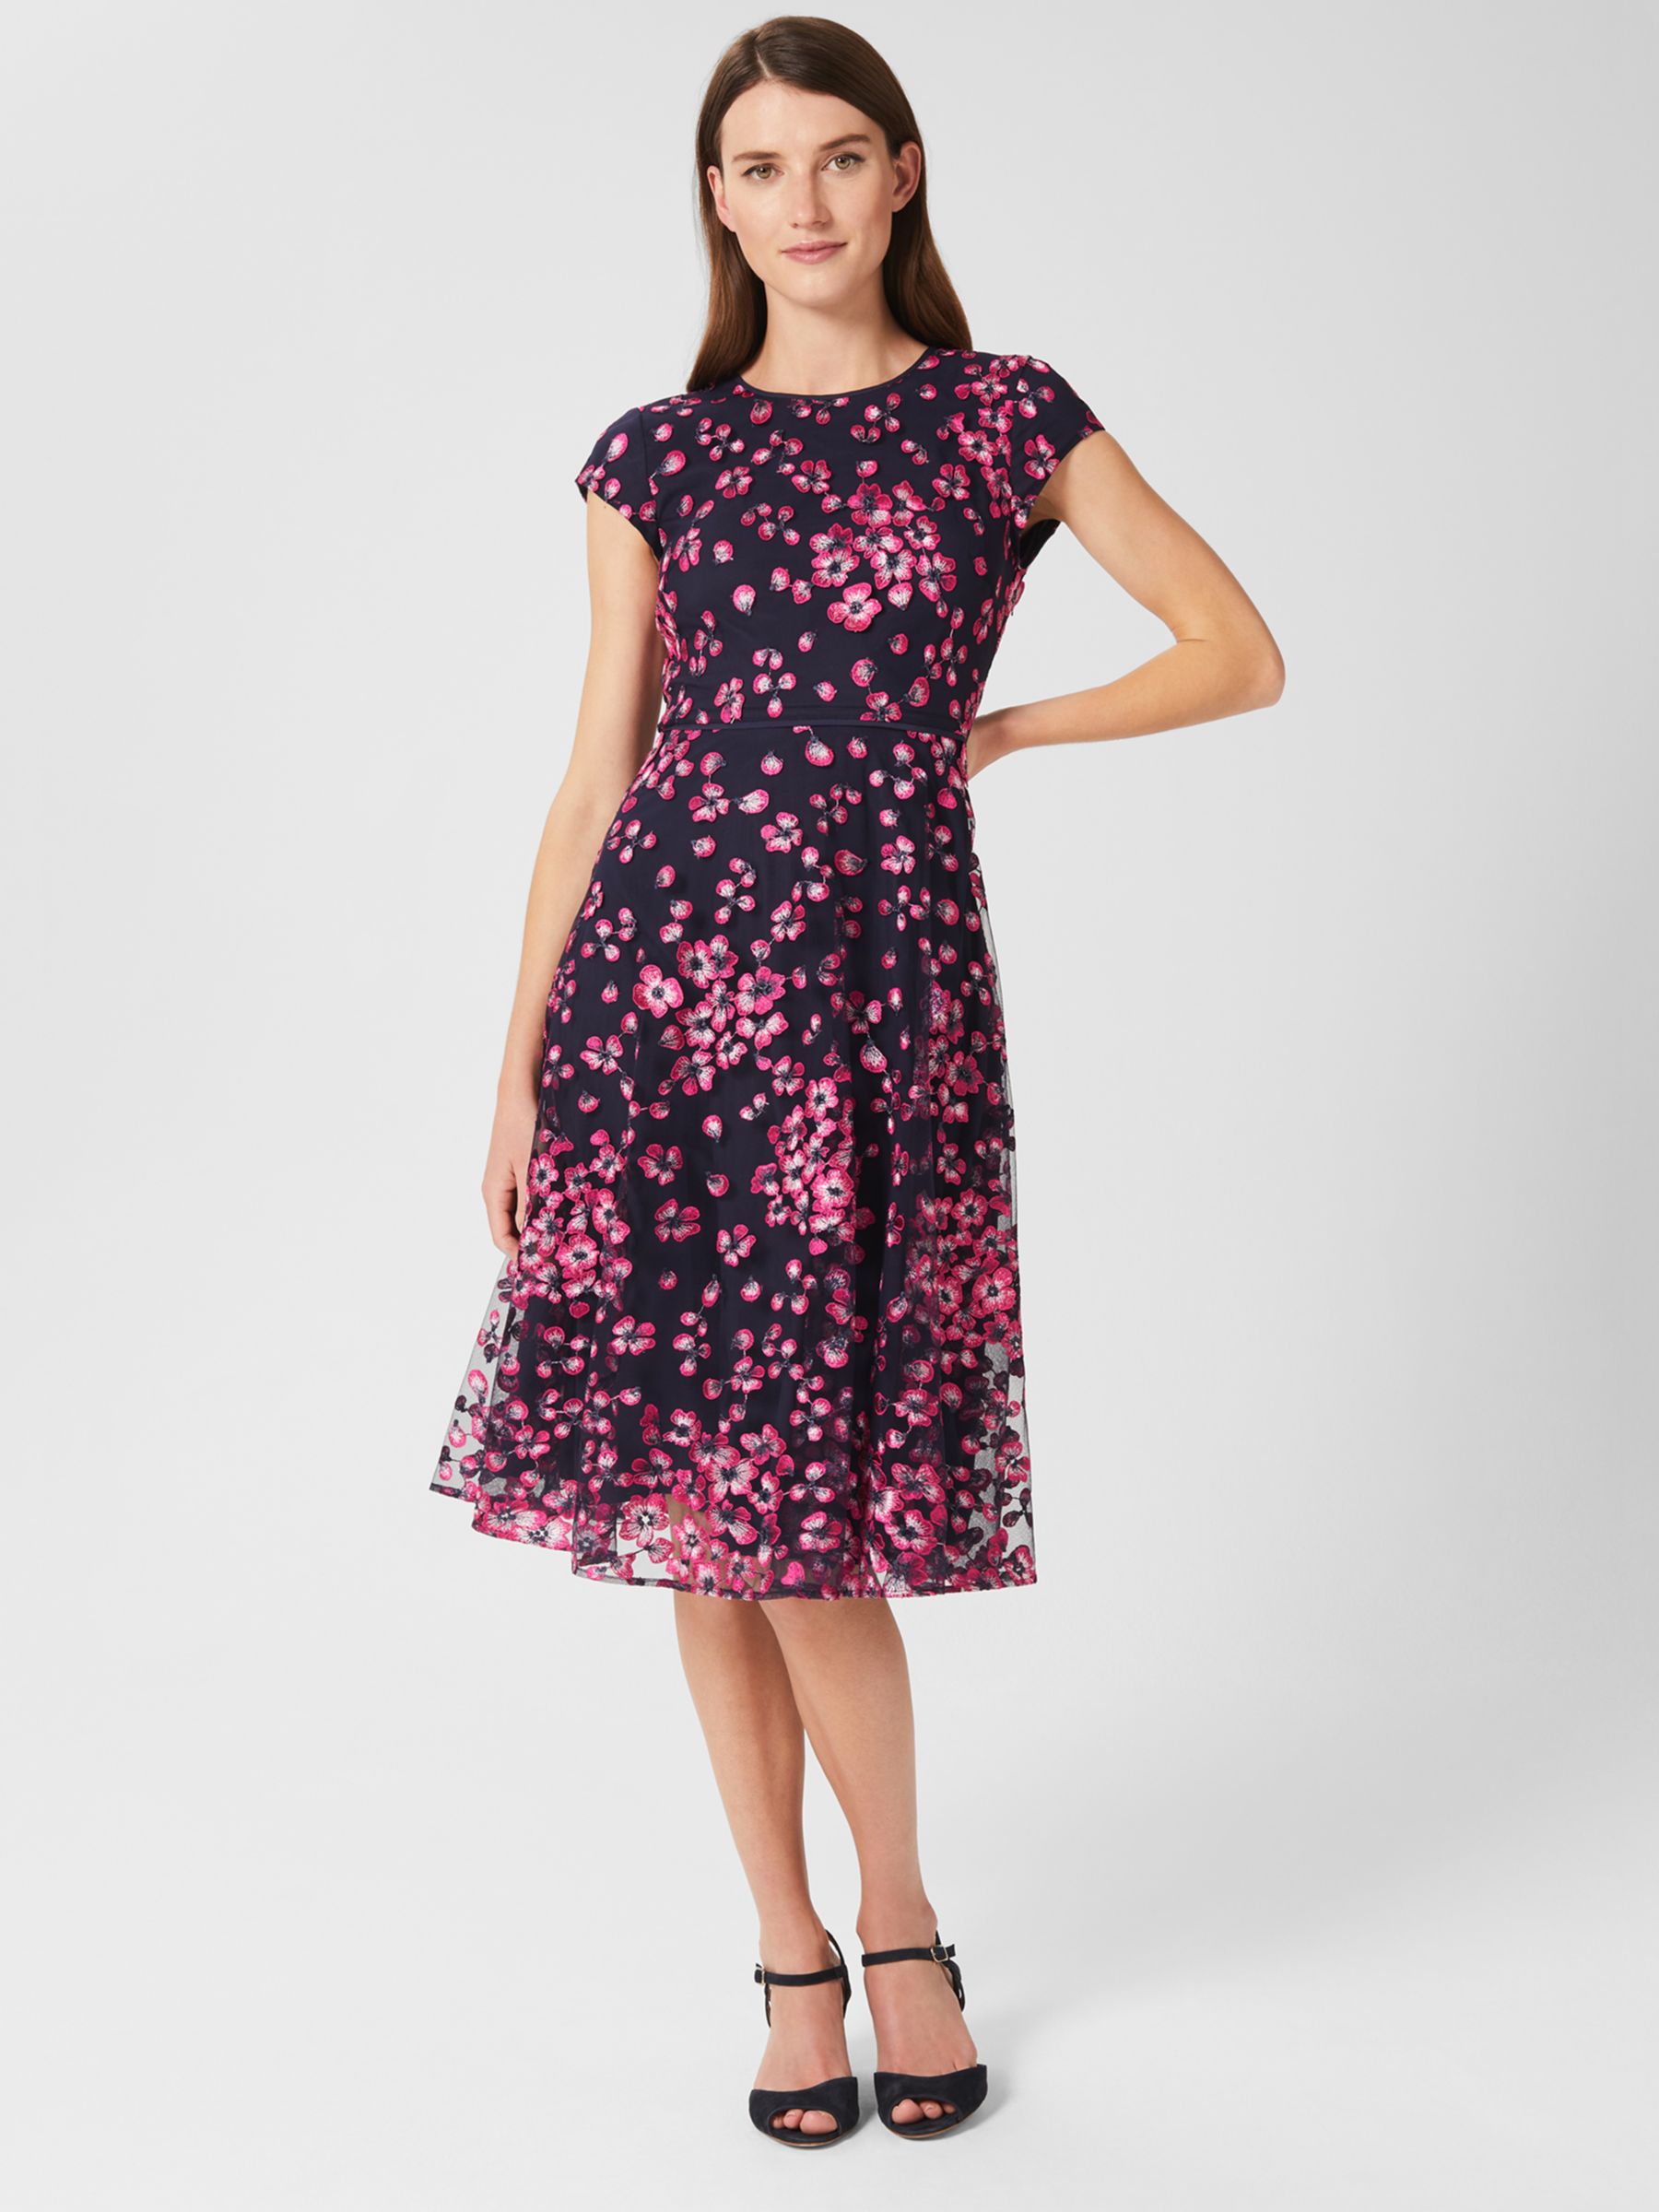 Hobbs Tia Embroidered Dress, Navy/Pink at John Lewis & Partners